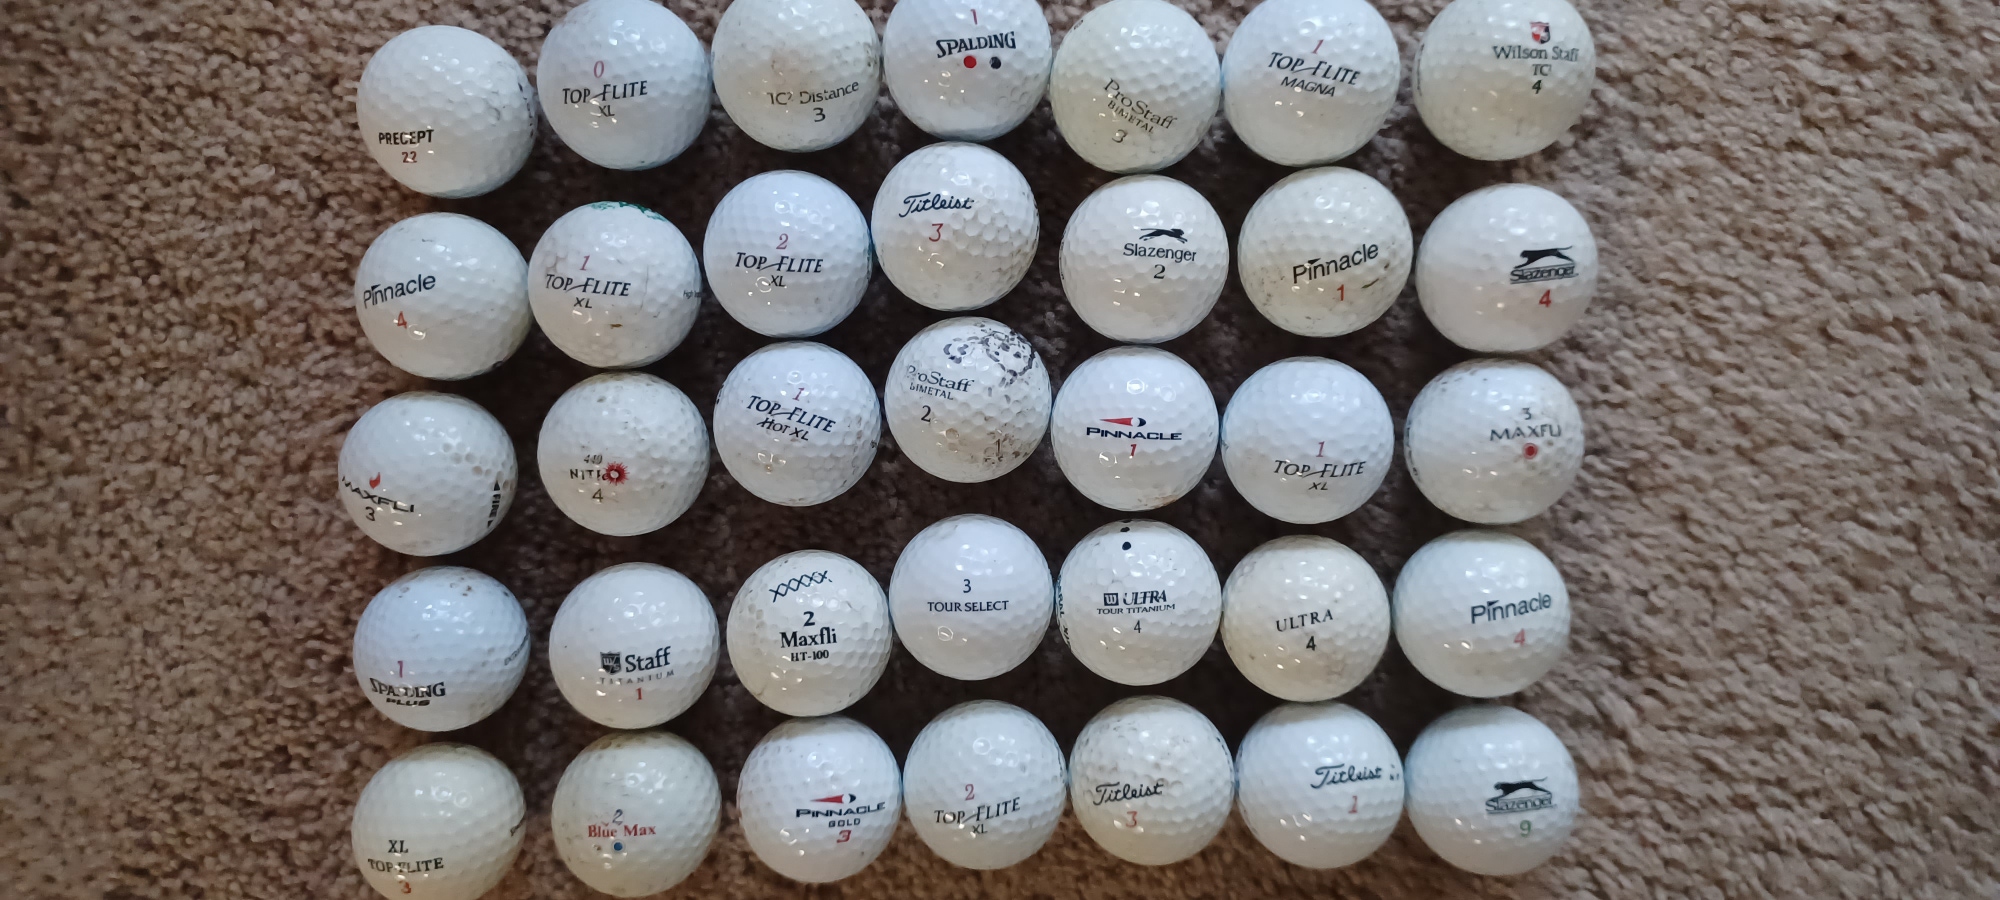 35 Used Golf Balls